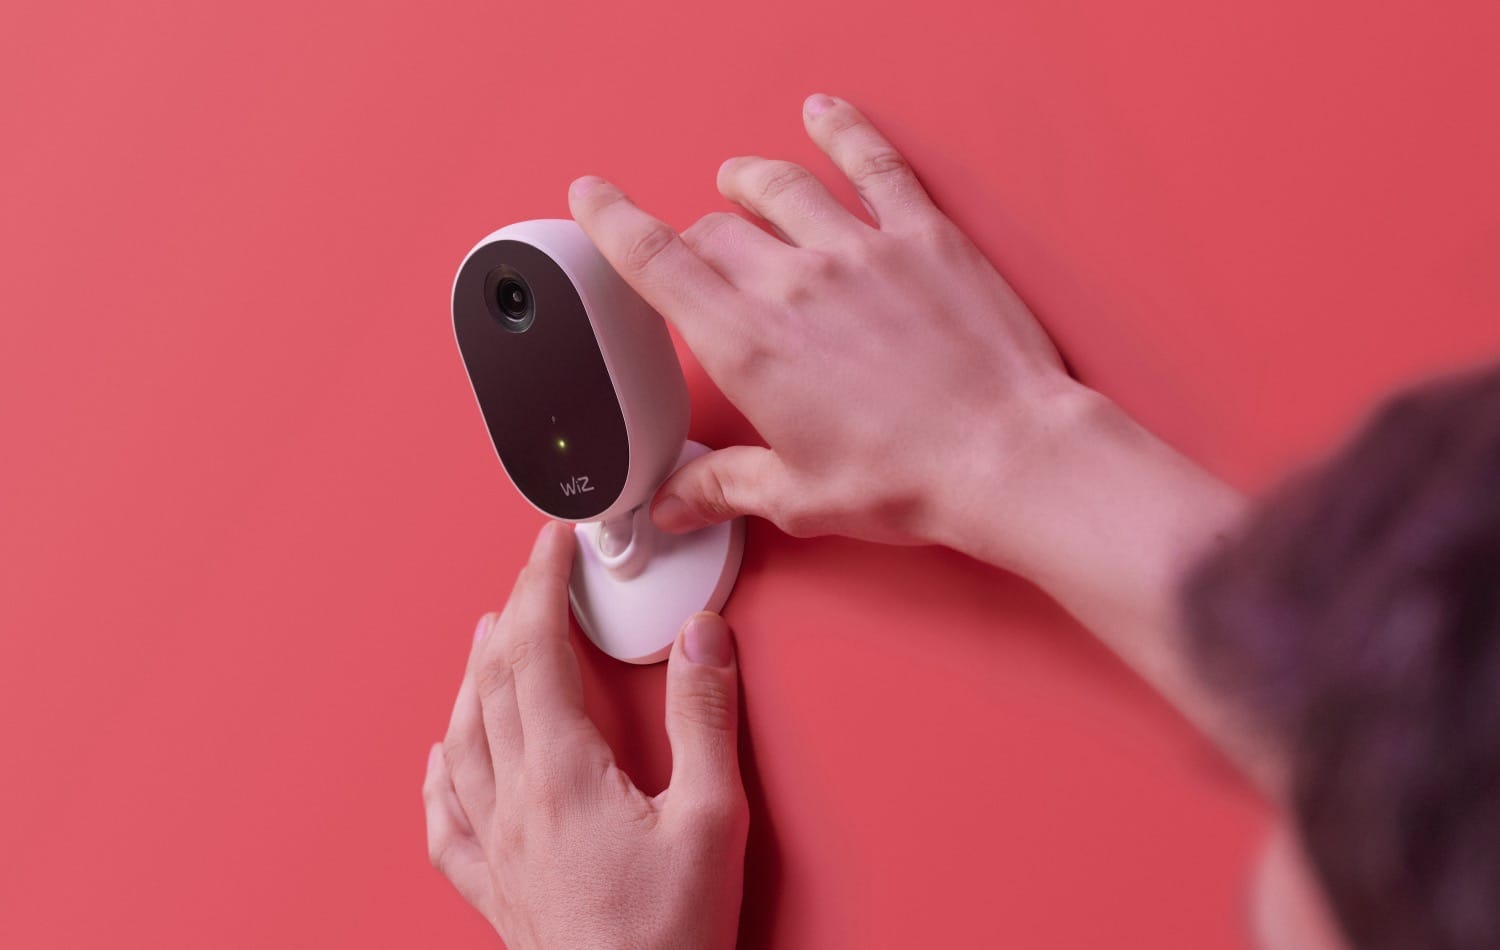 Hueblog: The new WiZ Indoor Camera has been officially announced